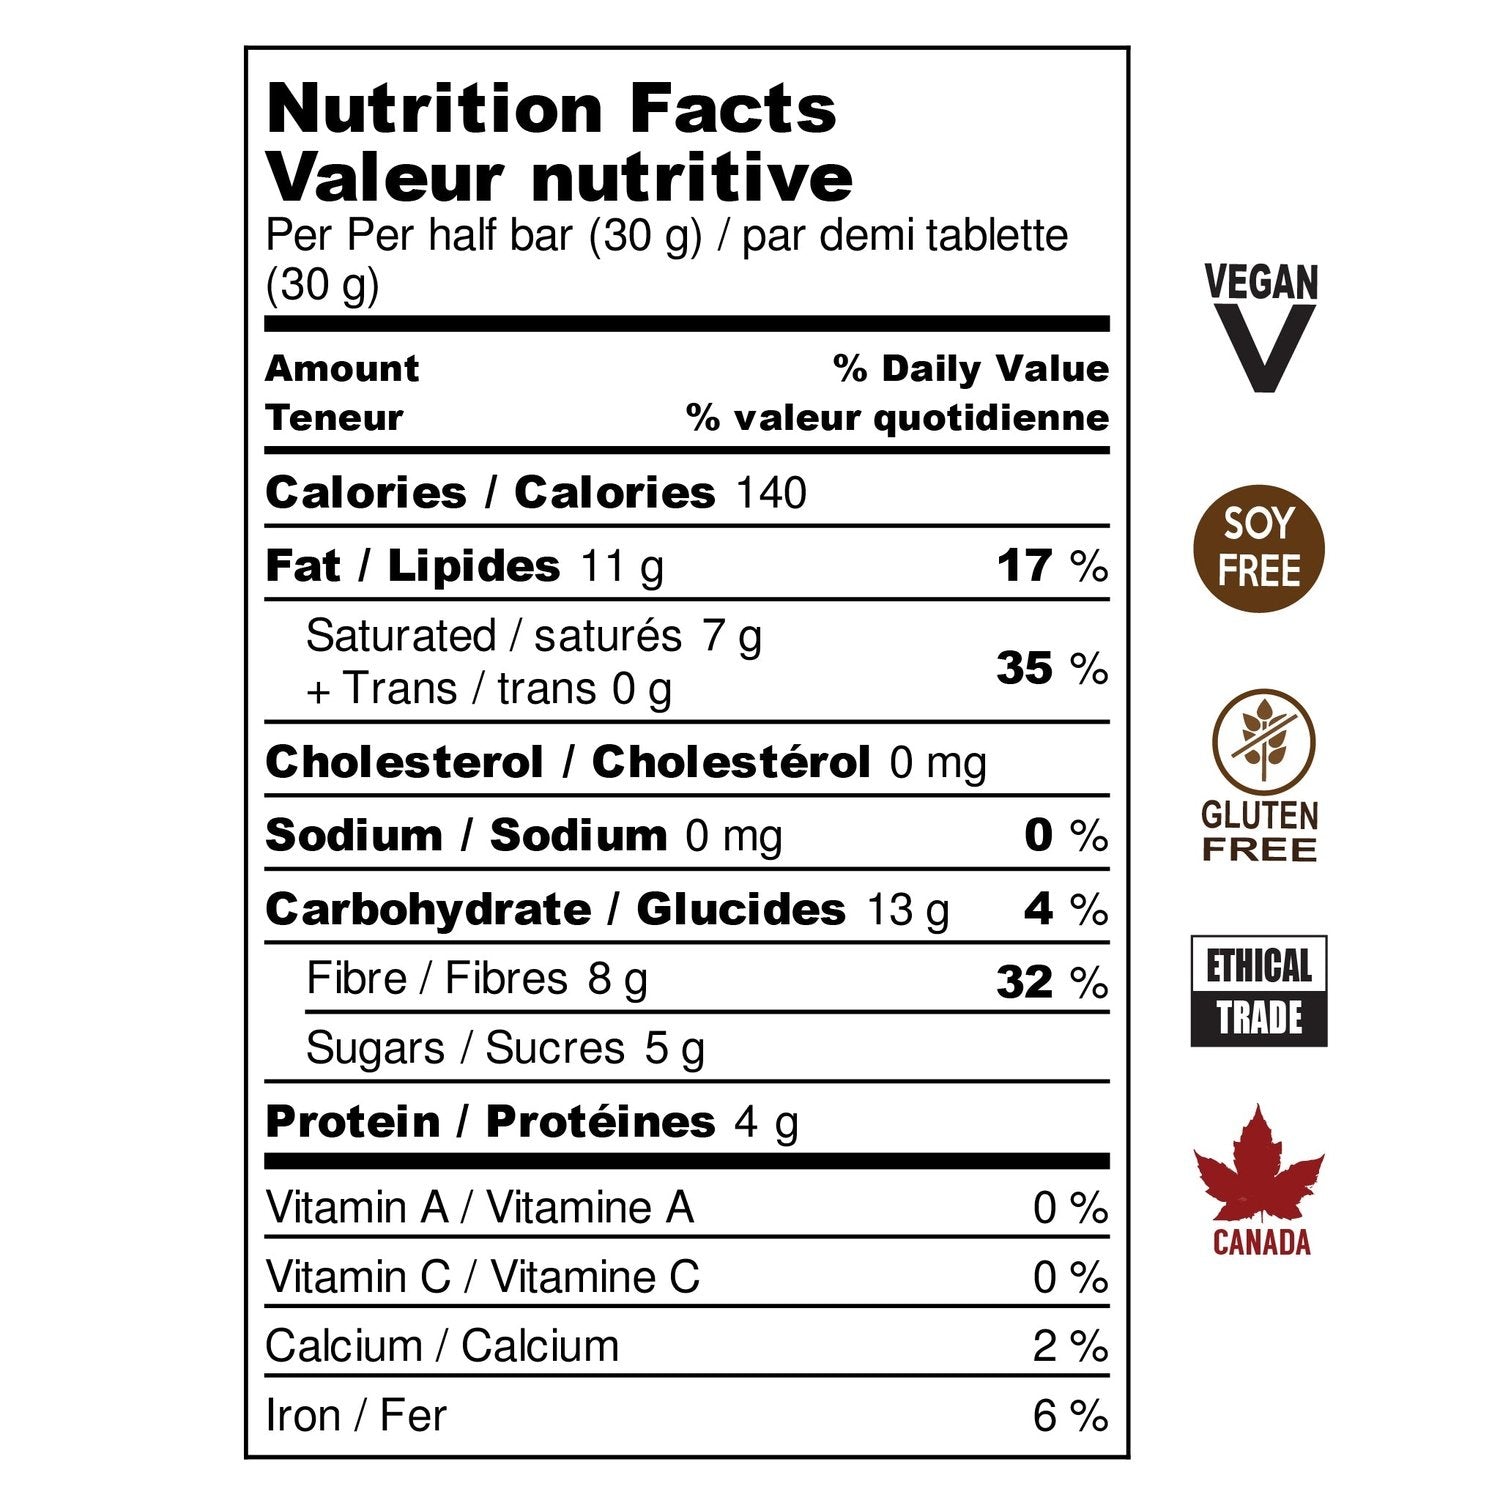 Hispaniola 85% dark chocolate bar nutritional information. Vegan, Soy Free, Gluten Free, Ethical Trade, Made in Canada